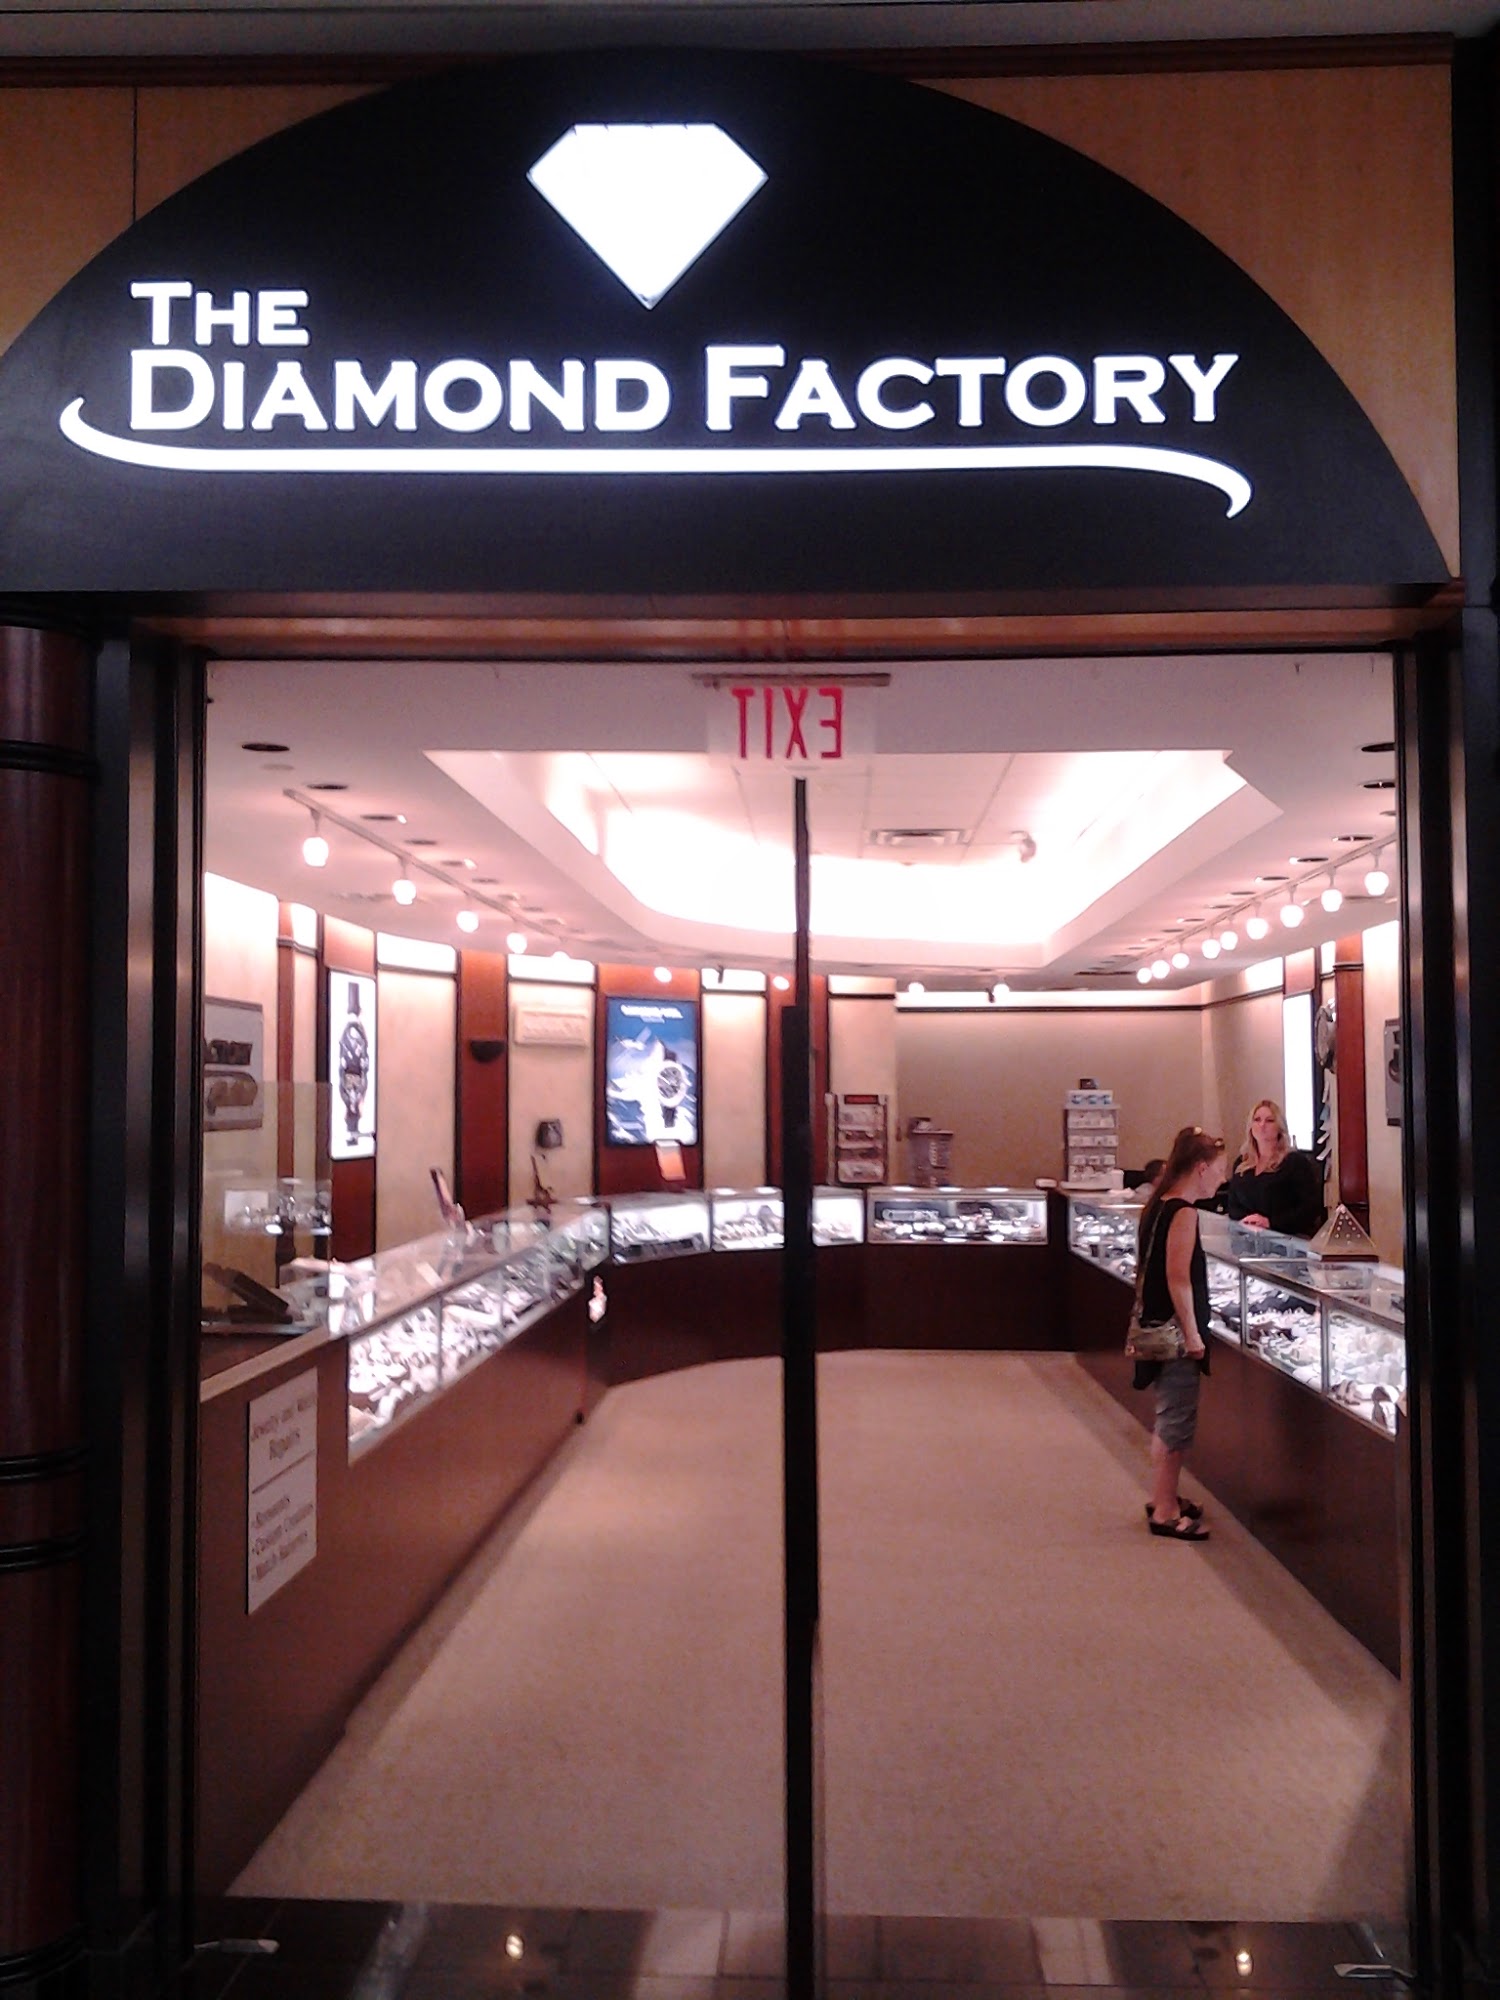 The Diamond Factory of Ann Arbor